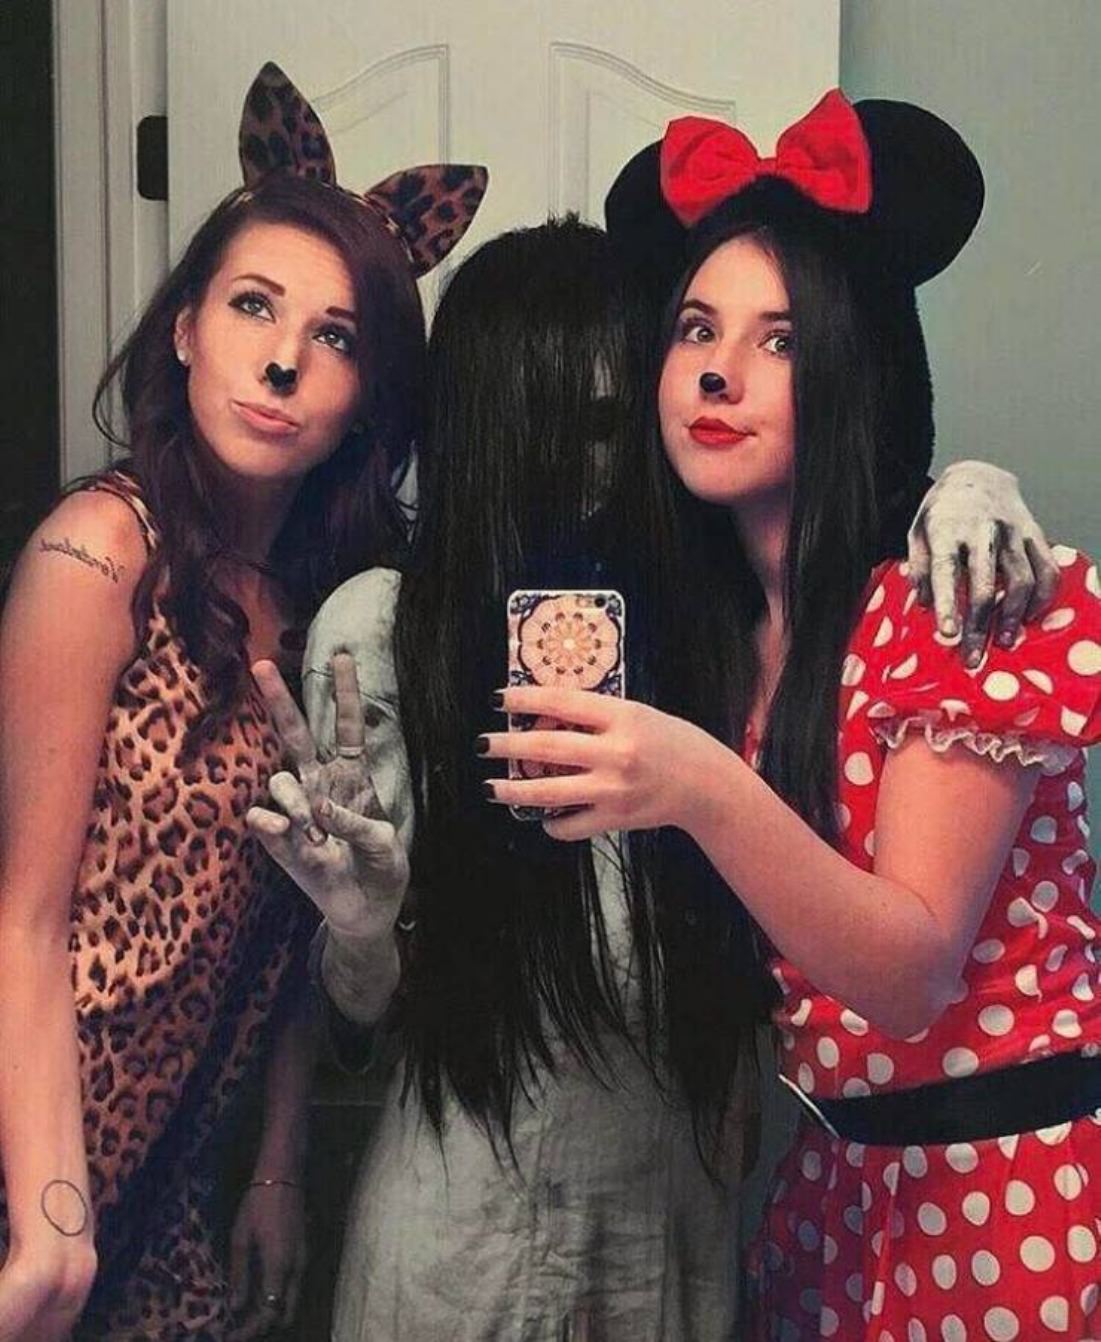 The girls of Halloween